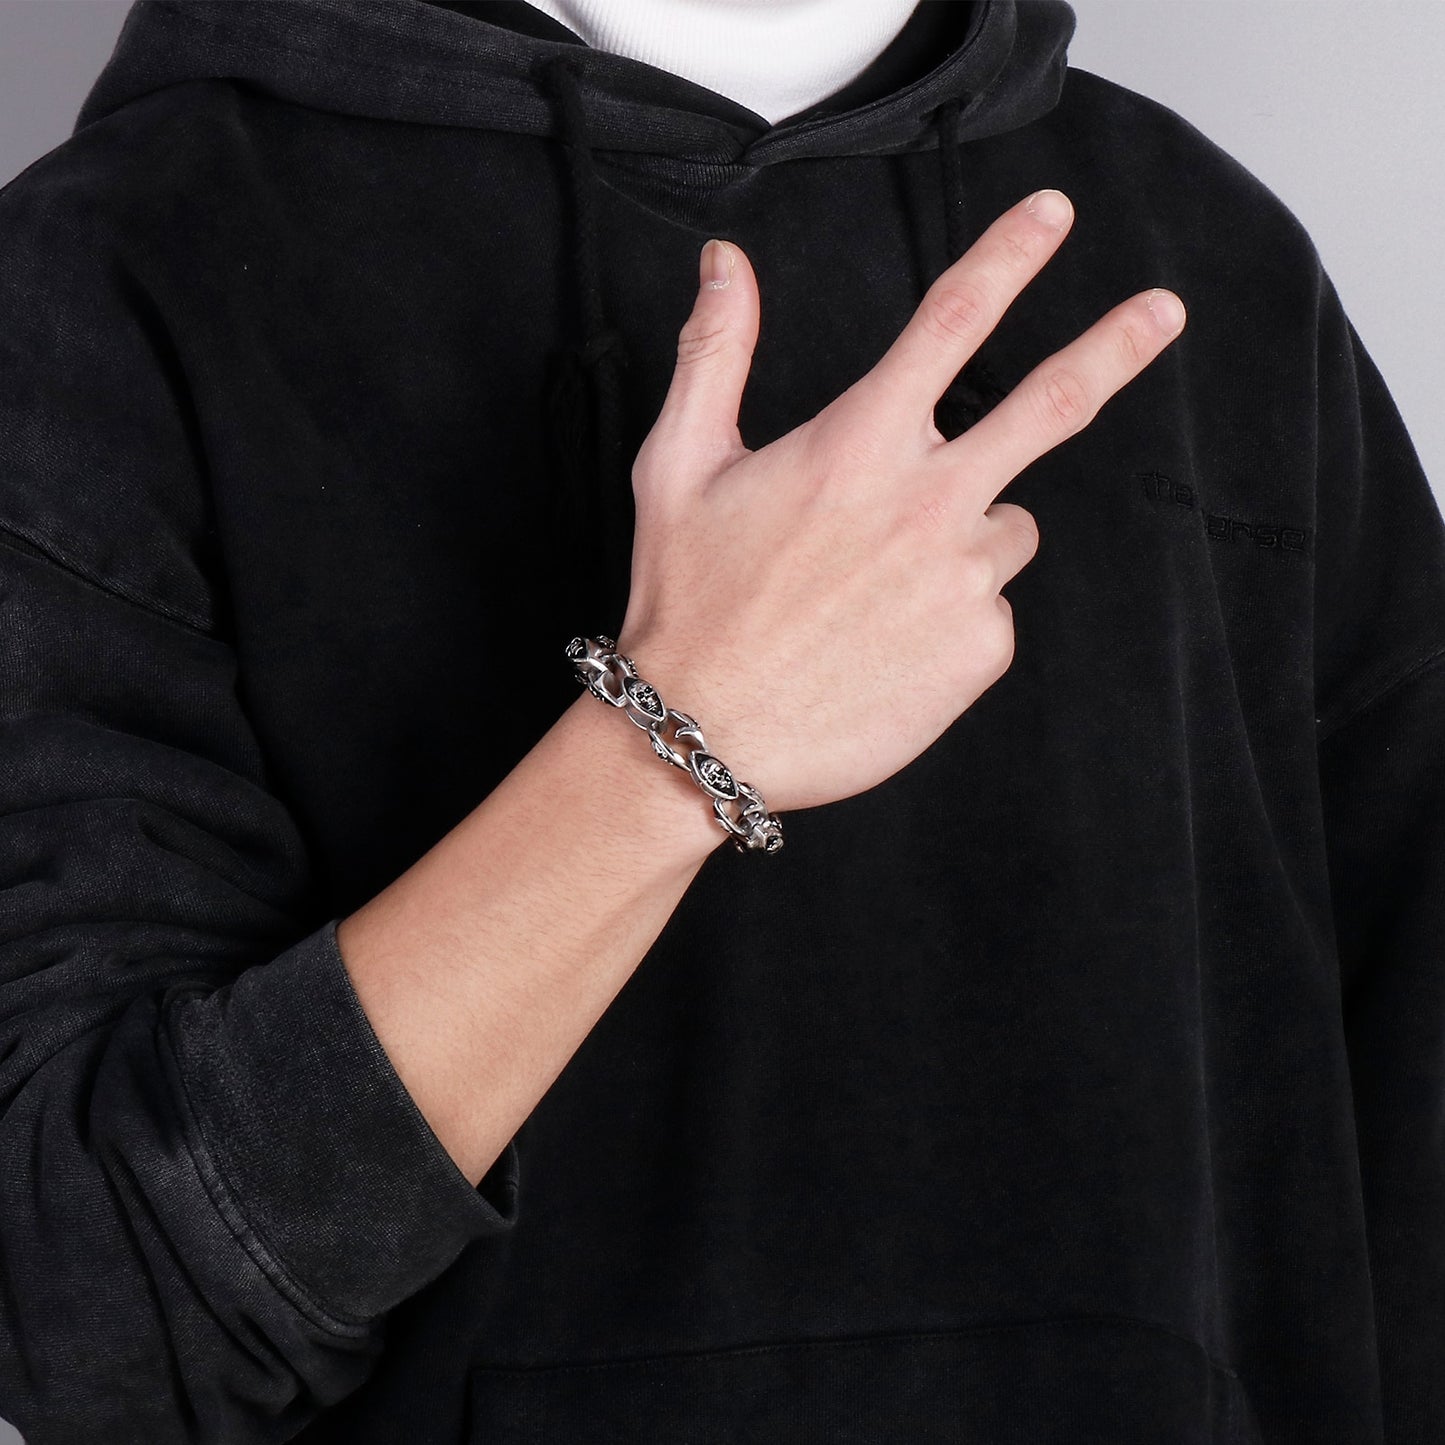 Retro Skull Chain Matte Black Men Bracelet Stainless Steel Long Big Wrist Band Fashion Jewelry